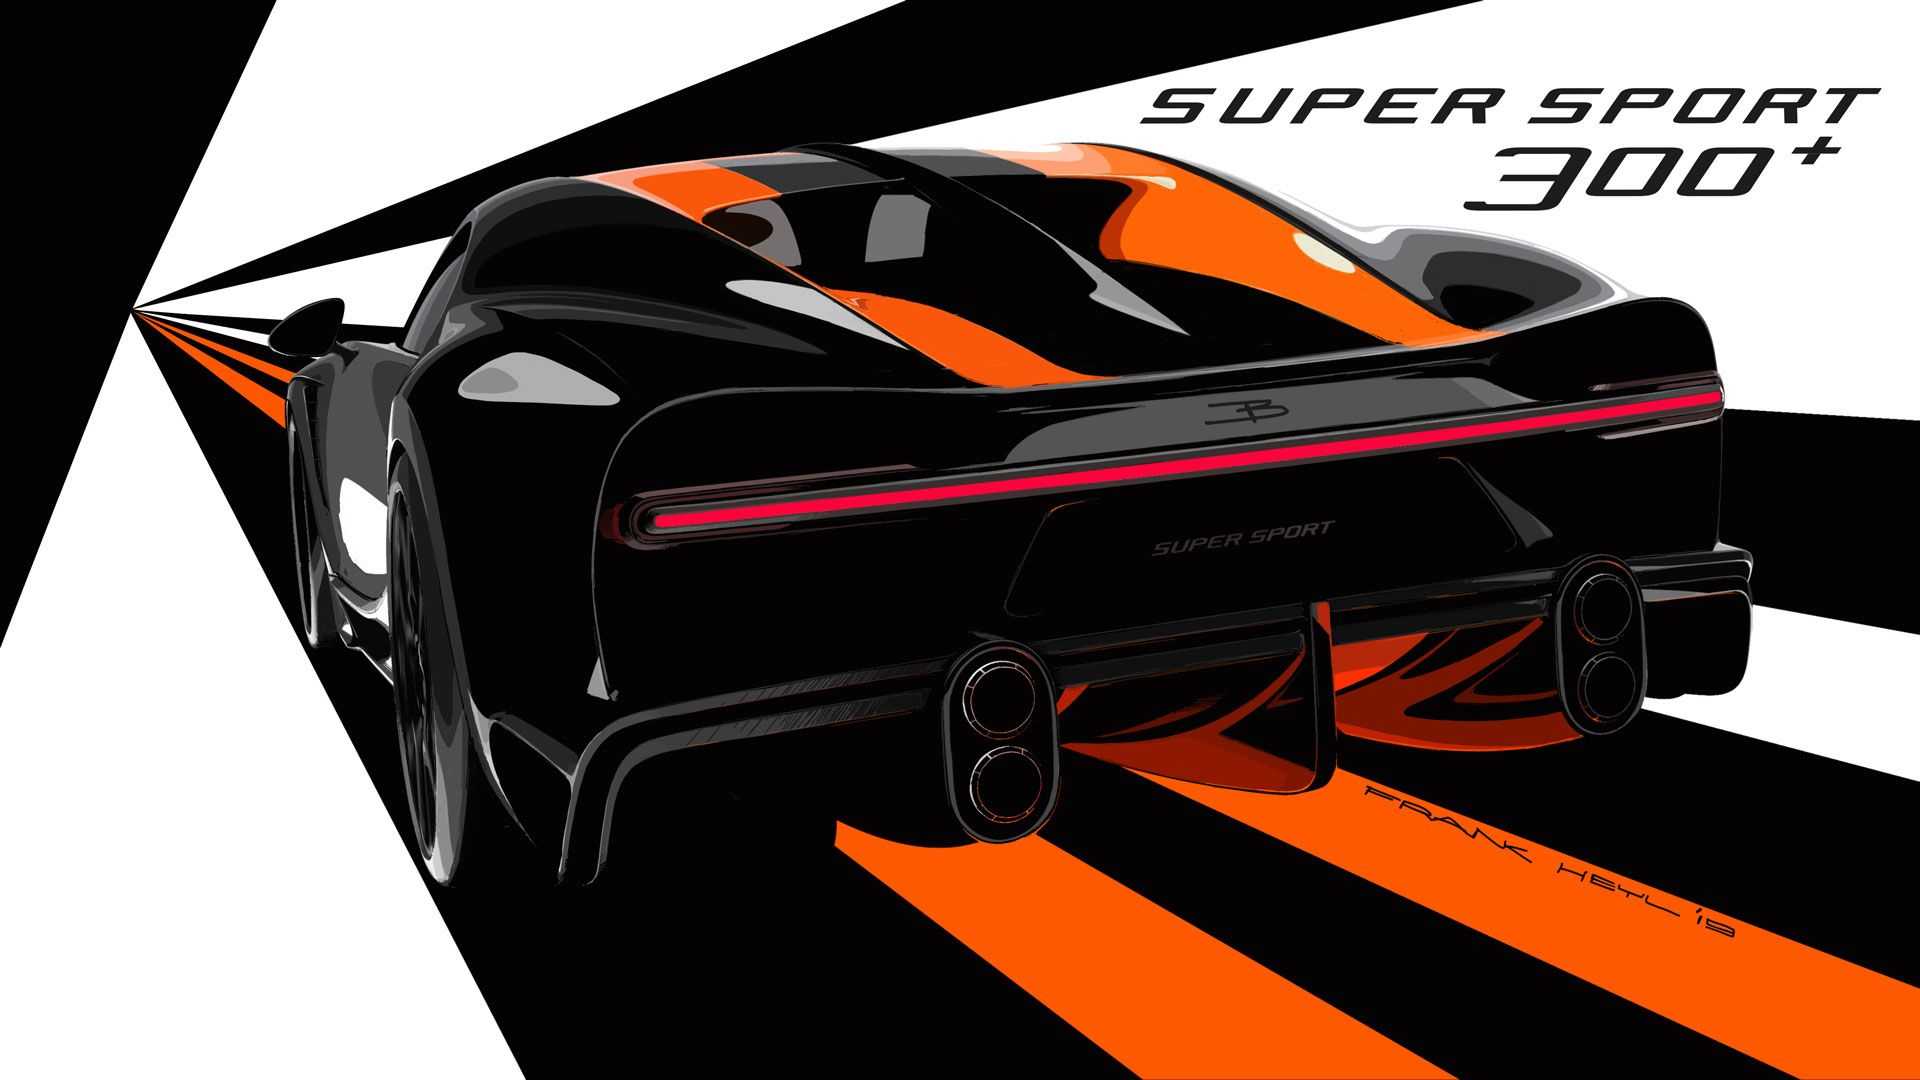 2021-bugatti-chiron-super-sport-300-7.jpg